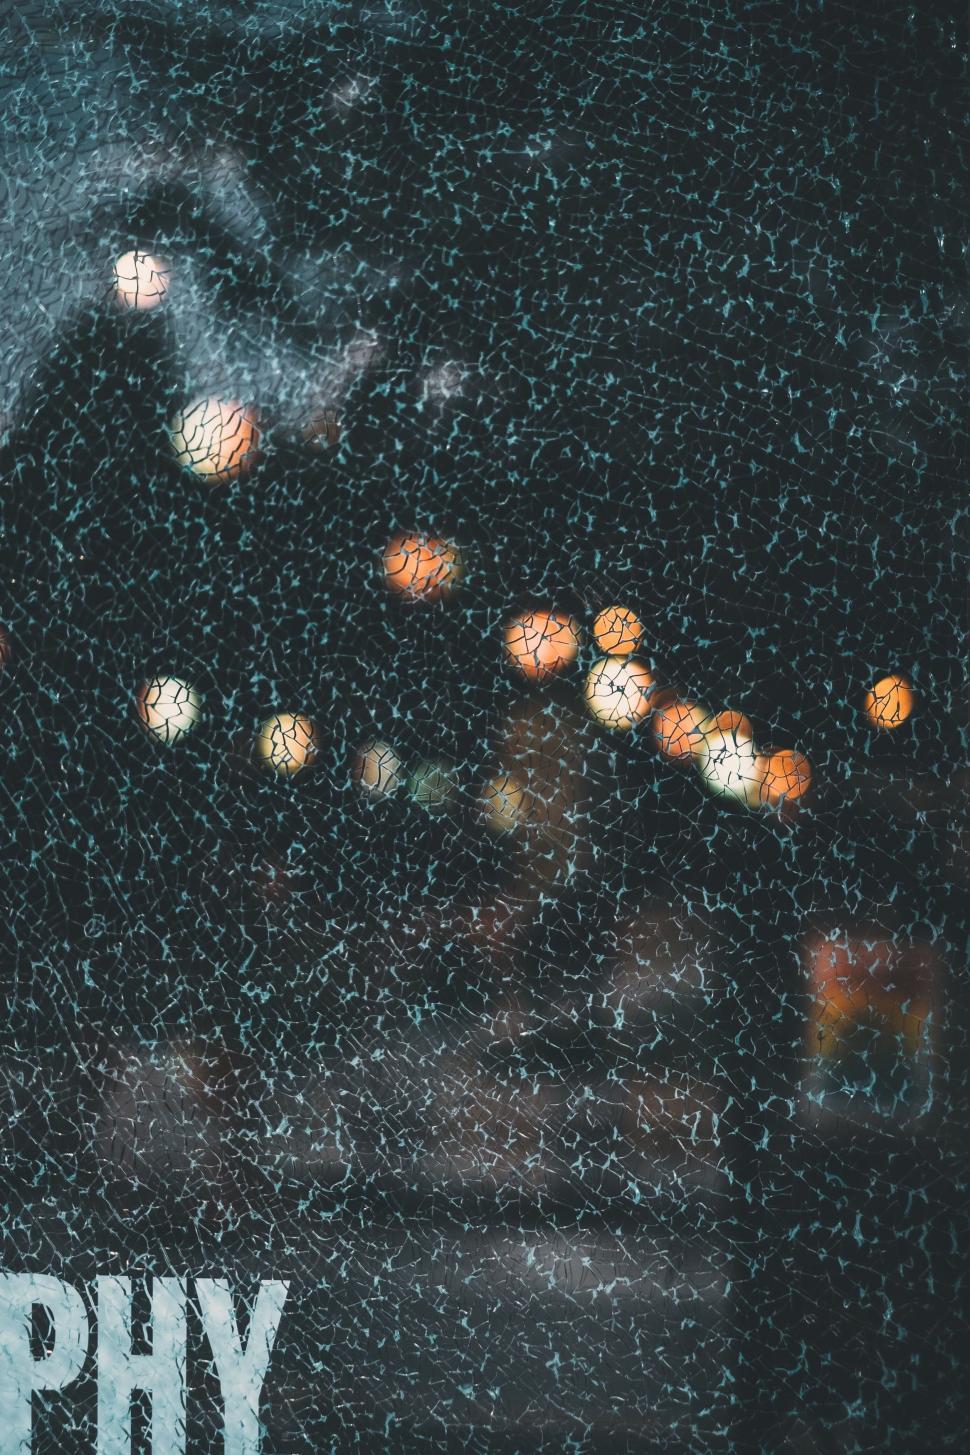 Free Image of Blurry City Street at Night 